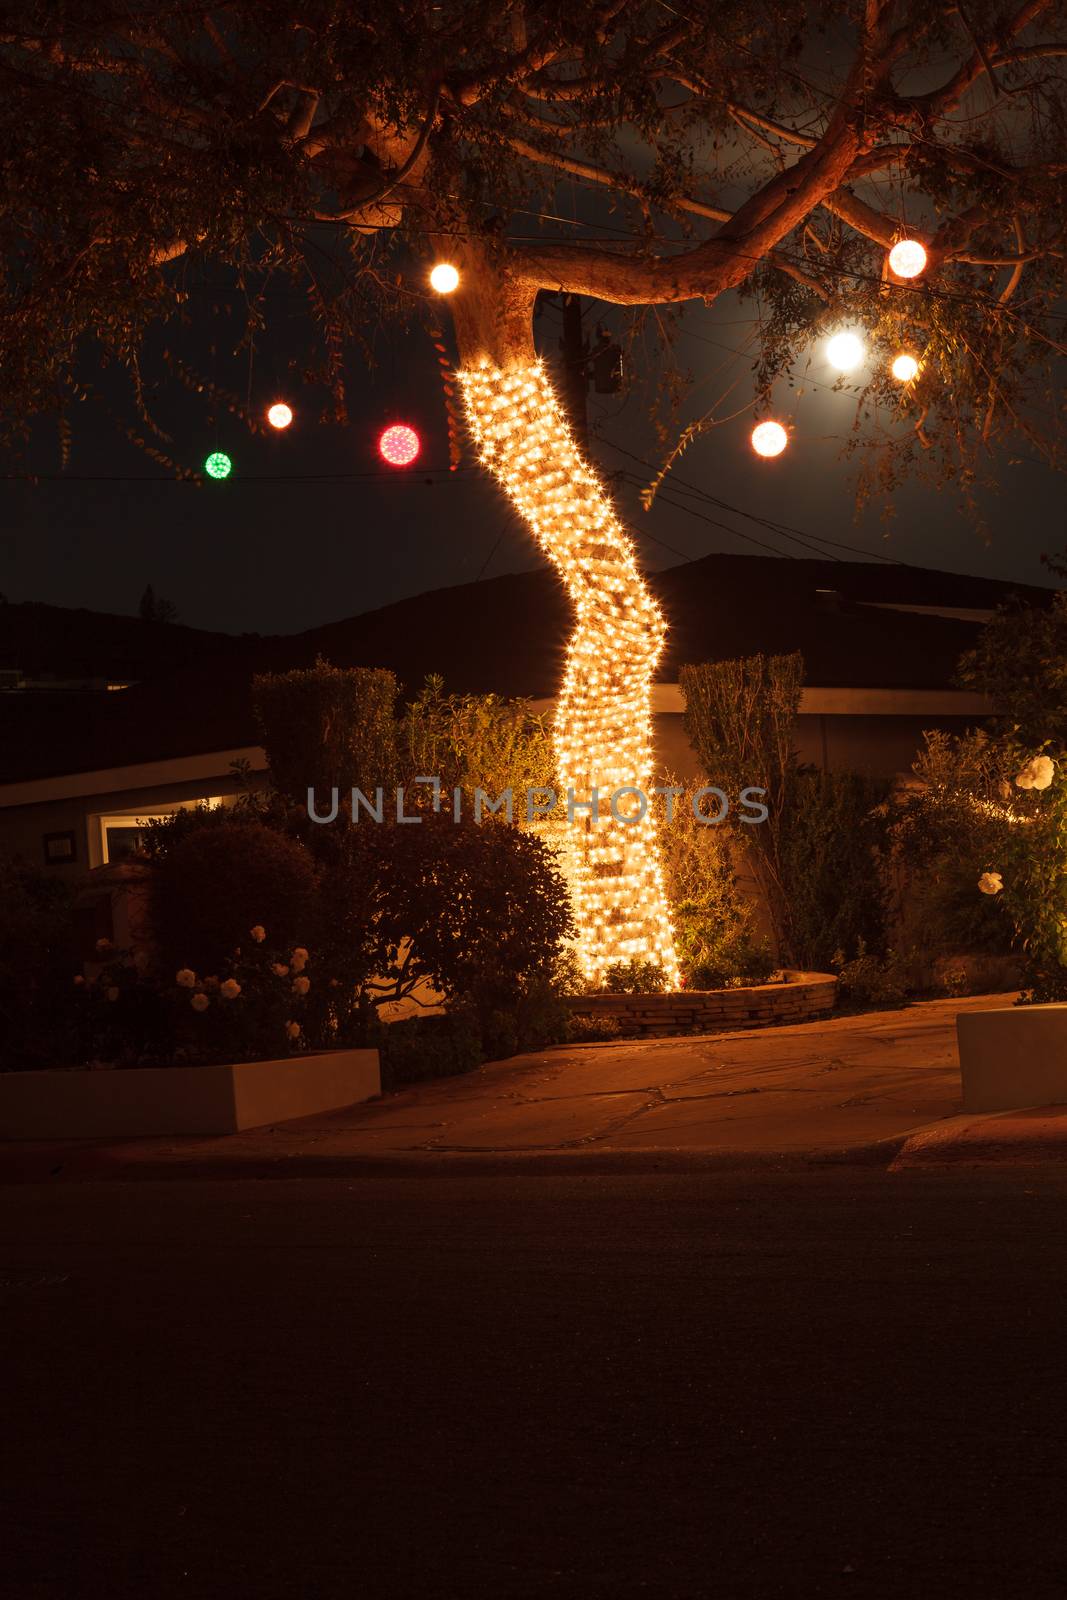 Full moon peaks through a tree with Christmas lights and balls in Laguna Beach, California.